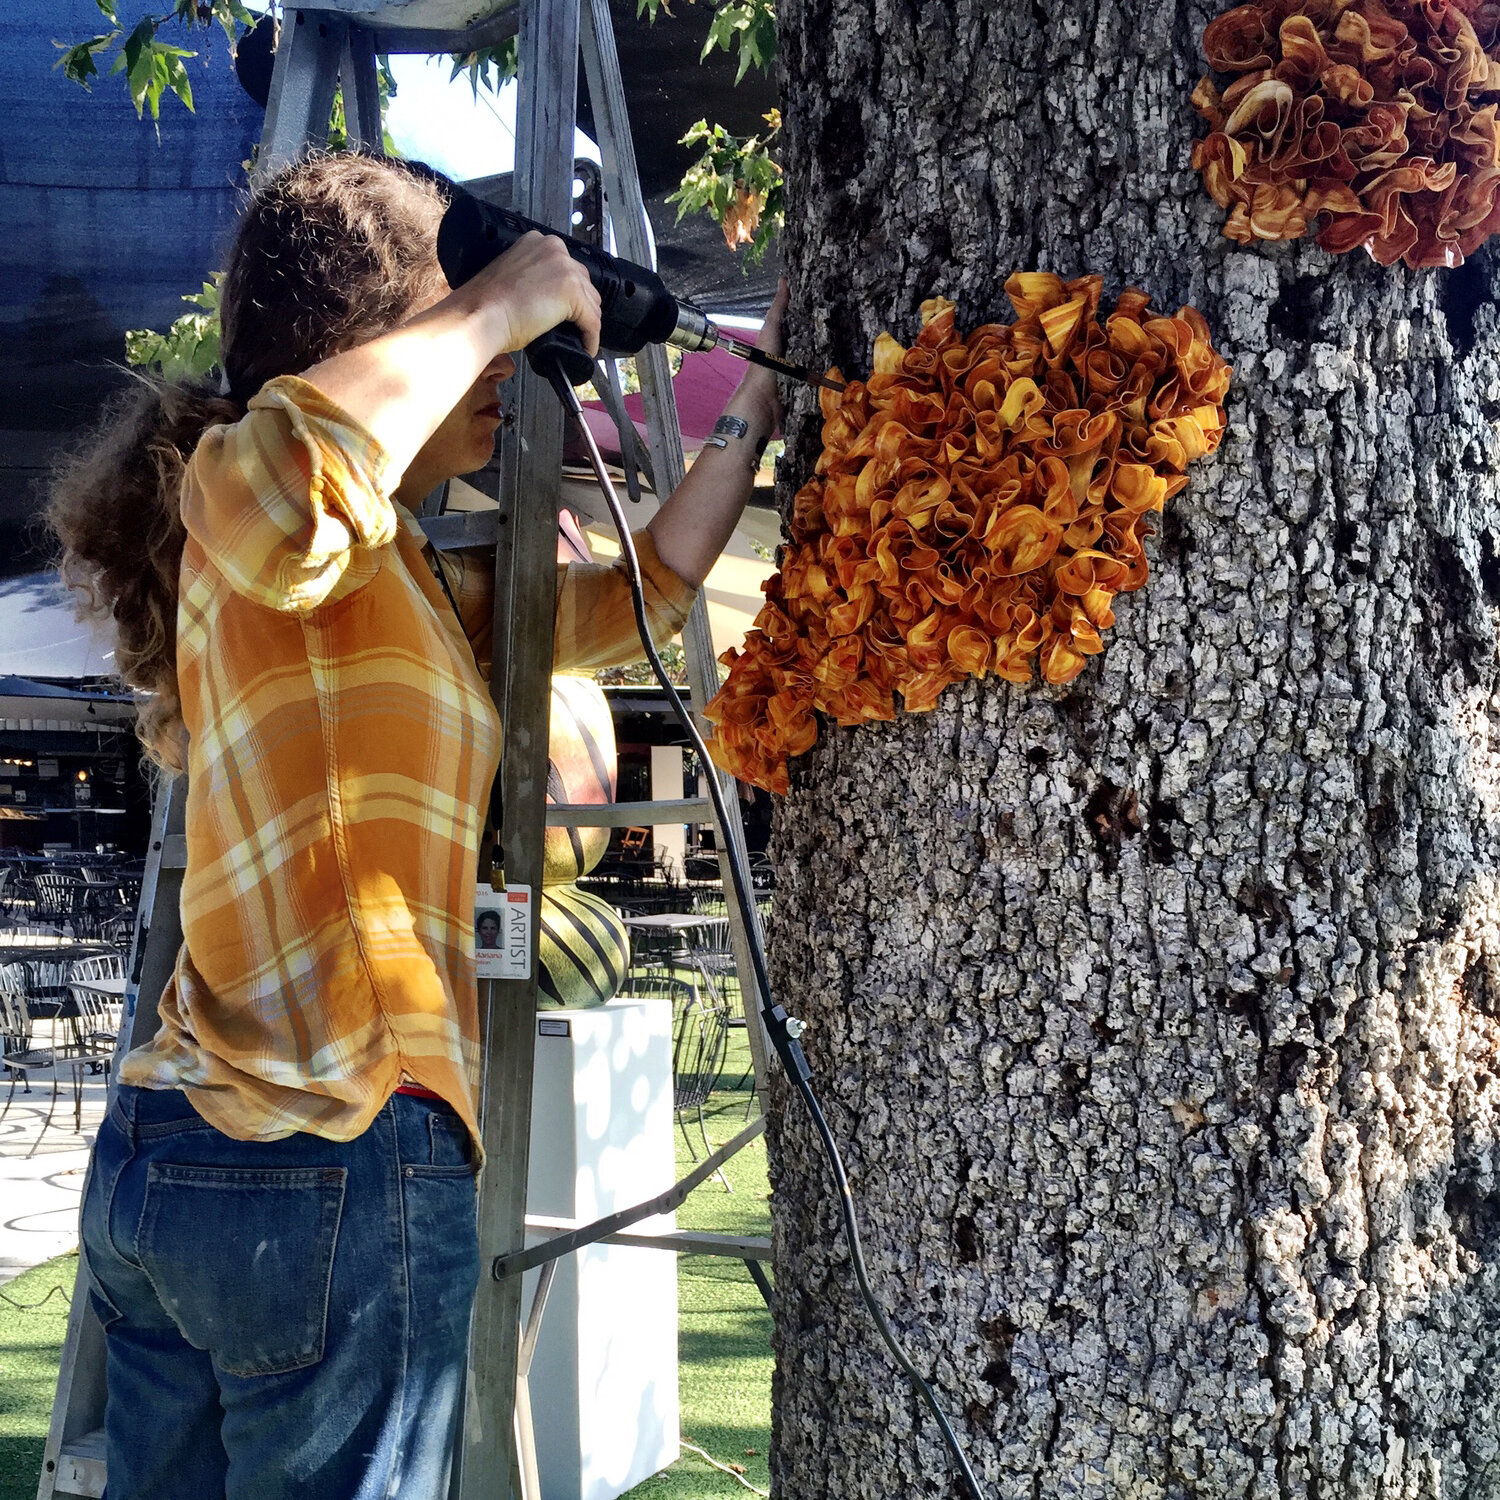 Installing Tree Fungus